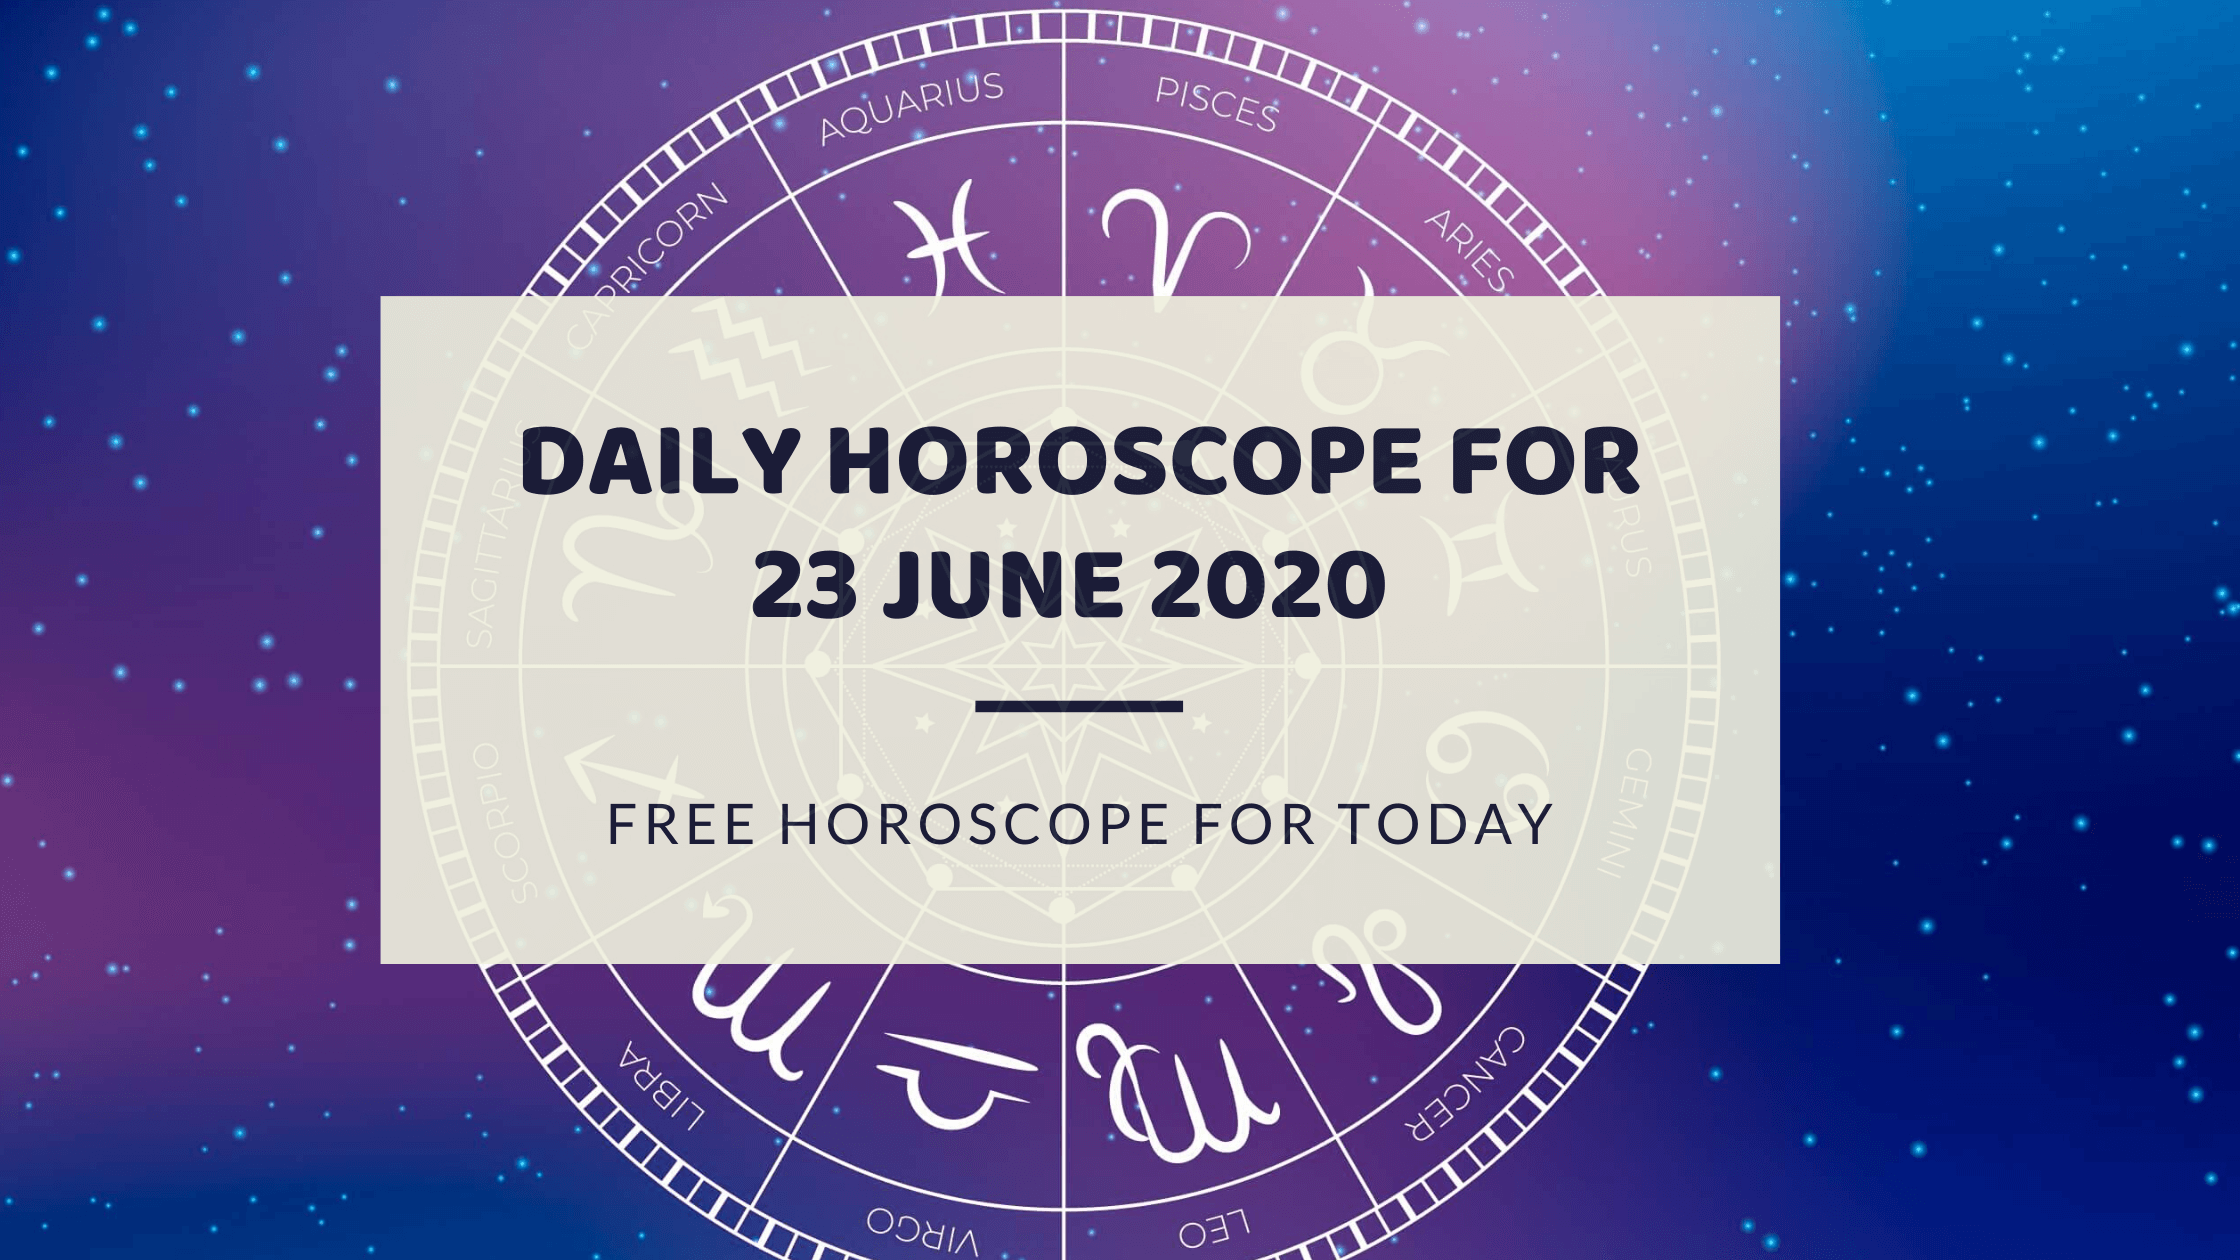 Daily horoscope for 23 june 2020 - free horoscope for today